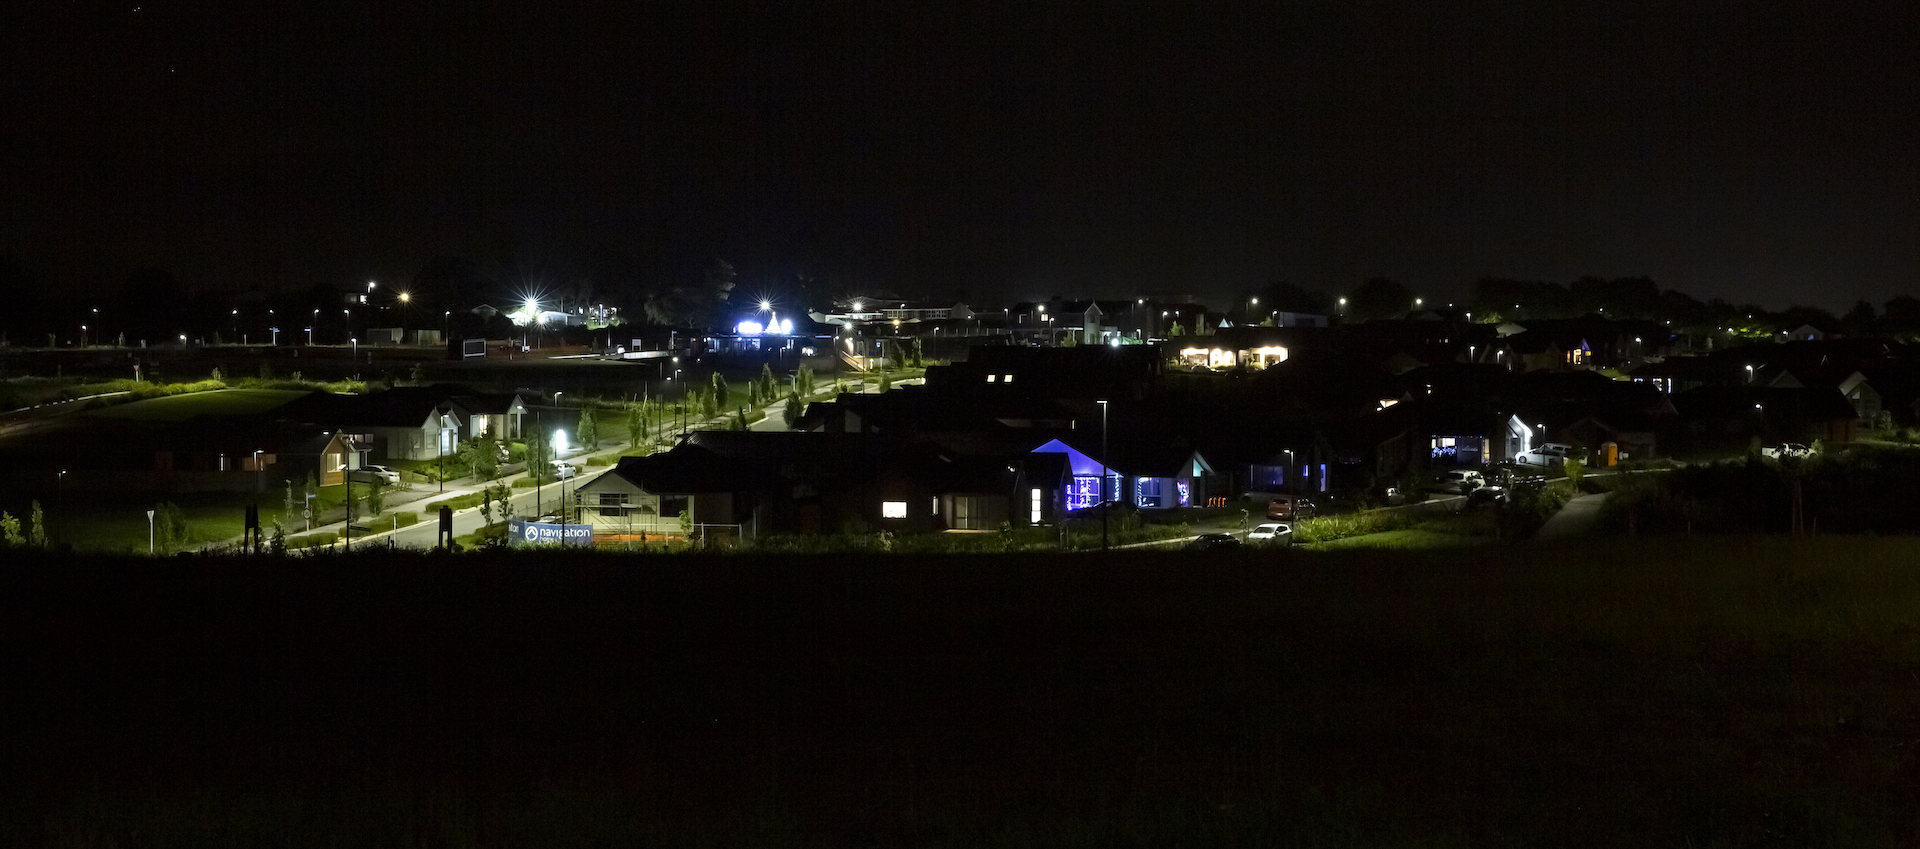 Paerata Rise neighbourhood overview at night illuminated by ibex lighting solutions.